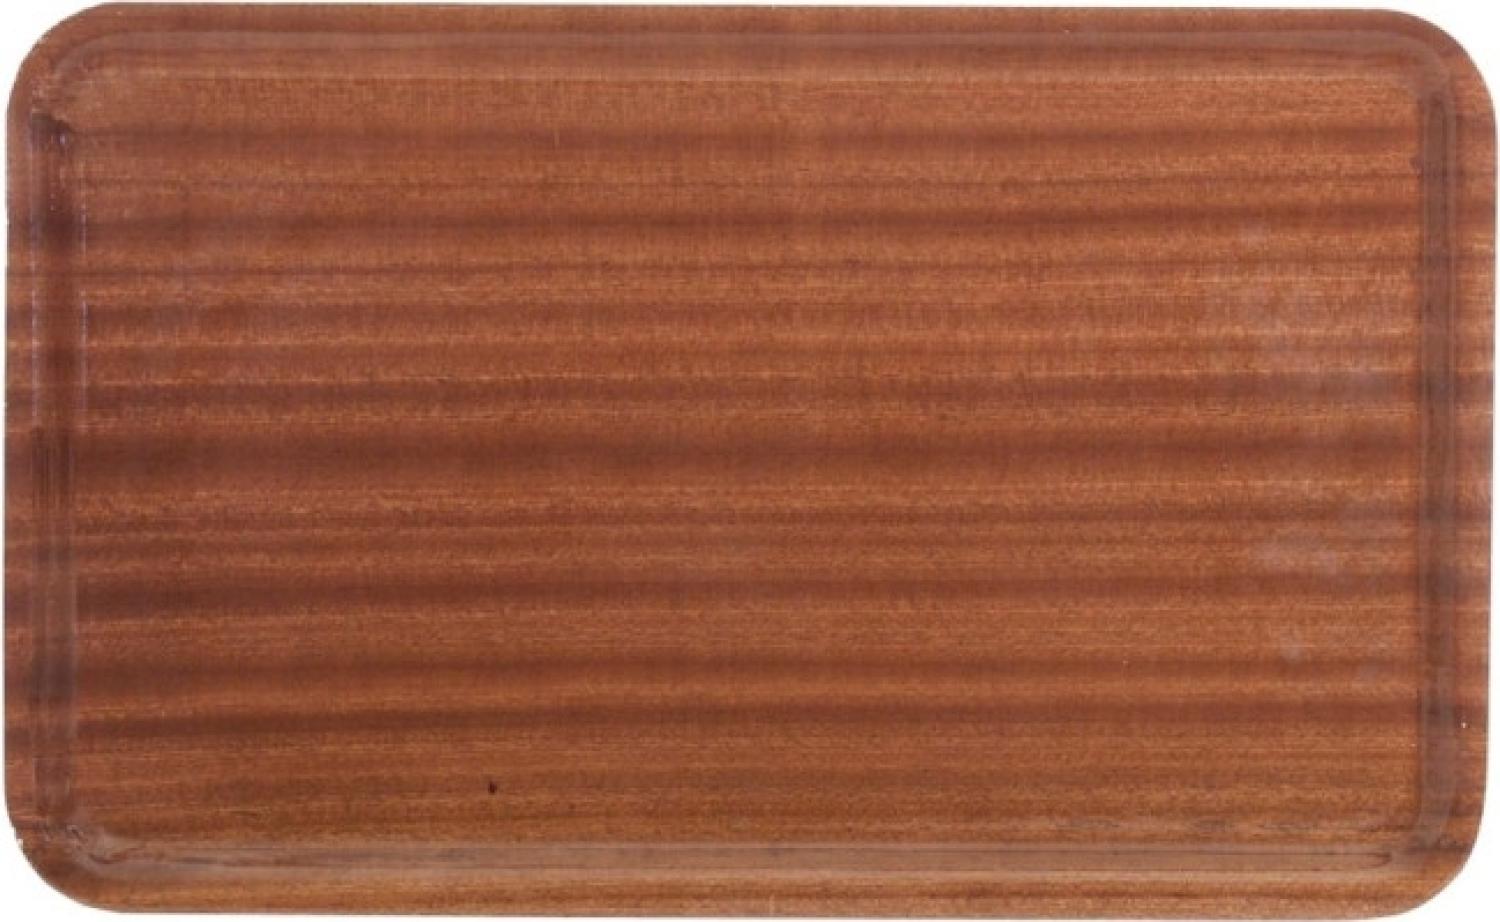 Contacto Holz Tablett GN 1/1, 53 x 32,5 cm rutschhemmend, Farbe Mahagoni Bild 1